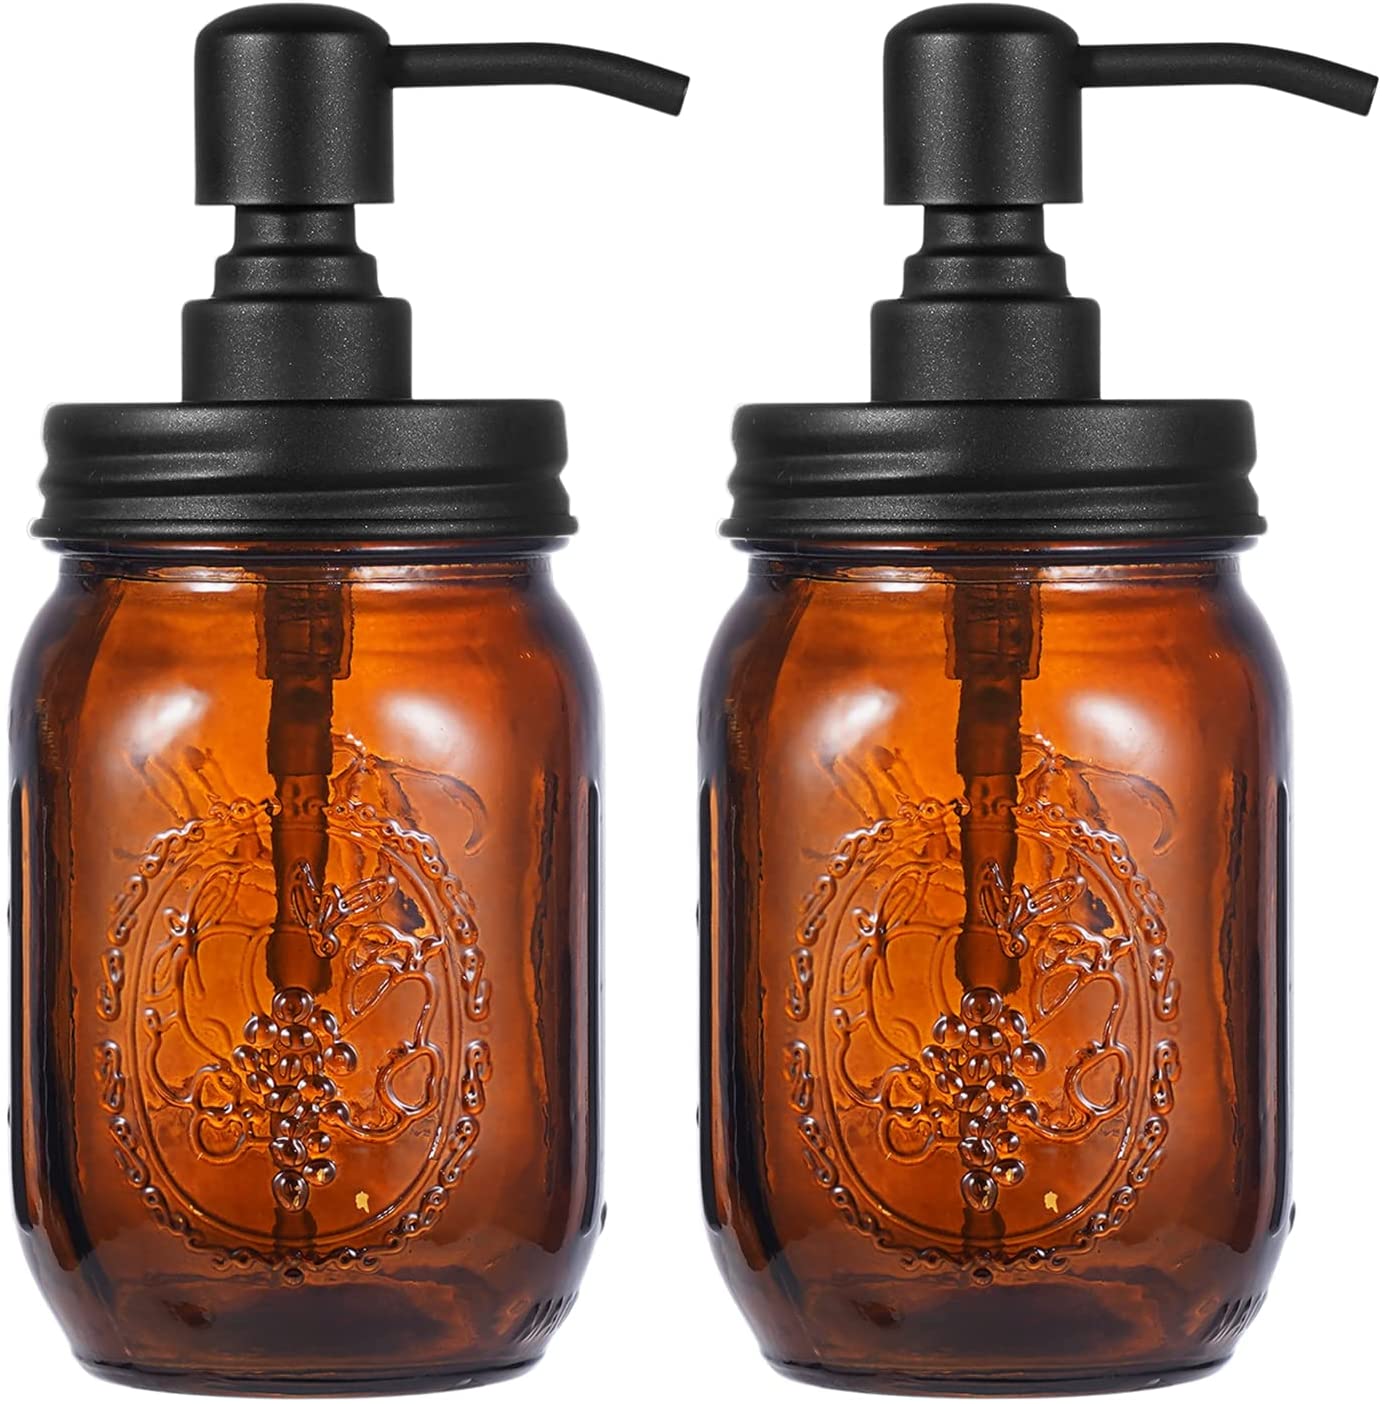 2PCS Amber Mason Jar Soap Dispenser, Lotion Dispenser with 16 Ounce Regular Amber Mouth Mason Jar (Oil Rubbed Bronze)